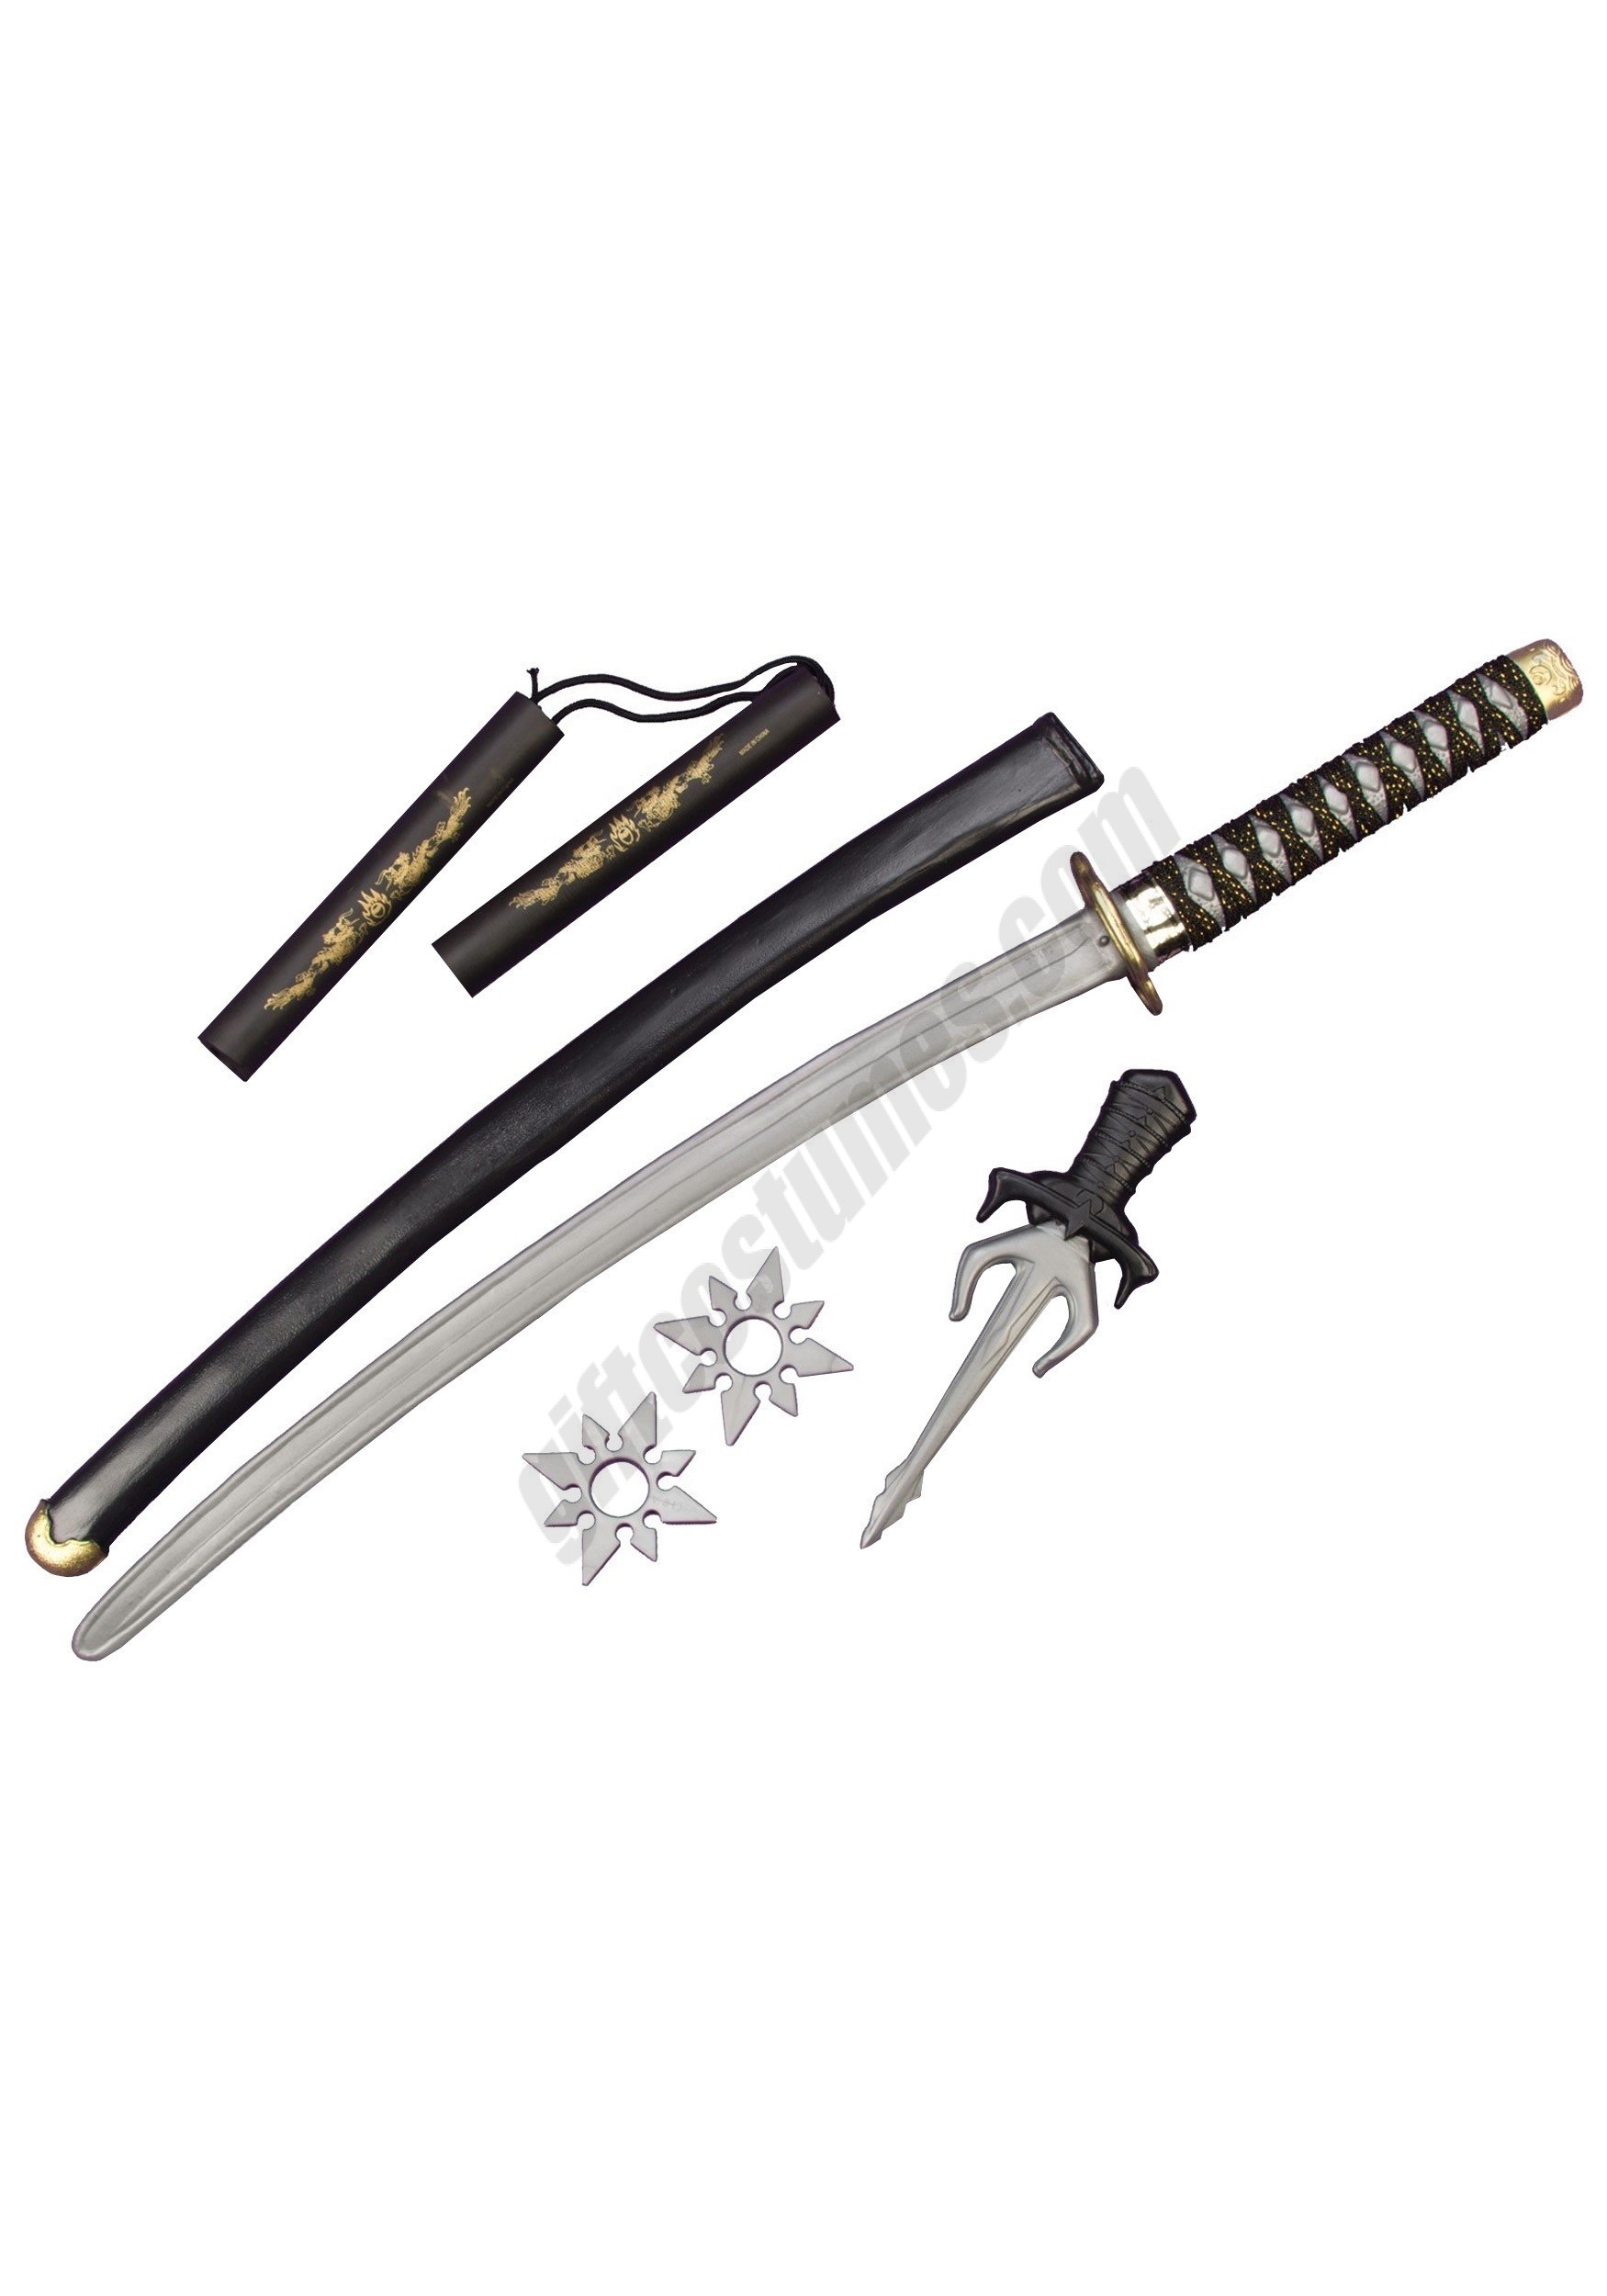 Ninja Weapon Kit Promotions - Ninja Weapon Kit Promotions